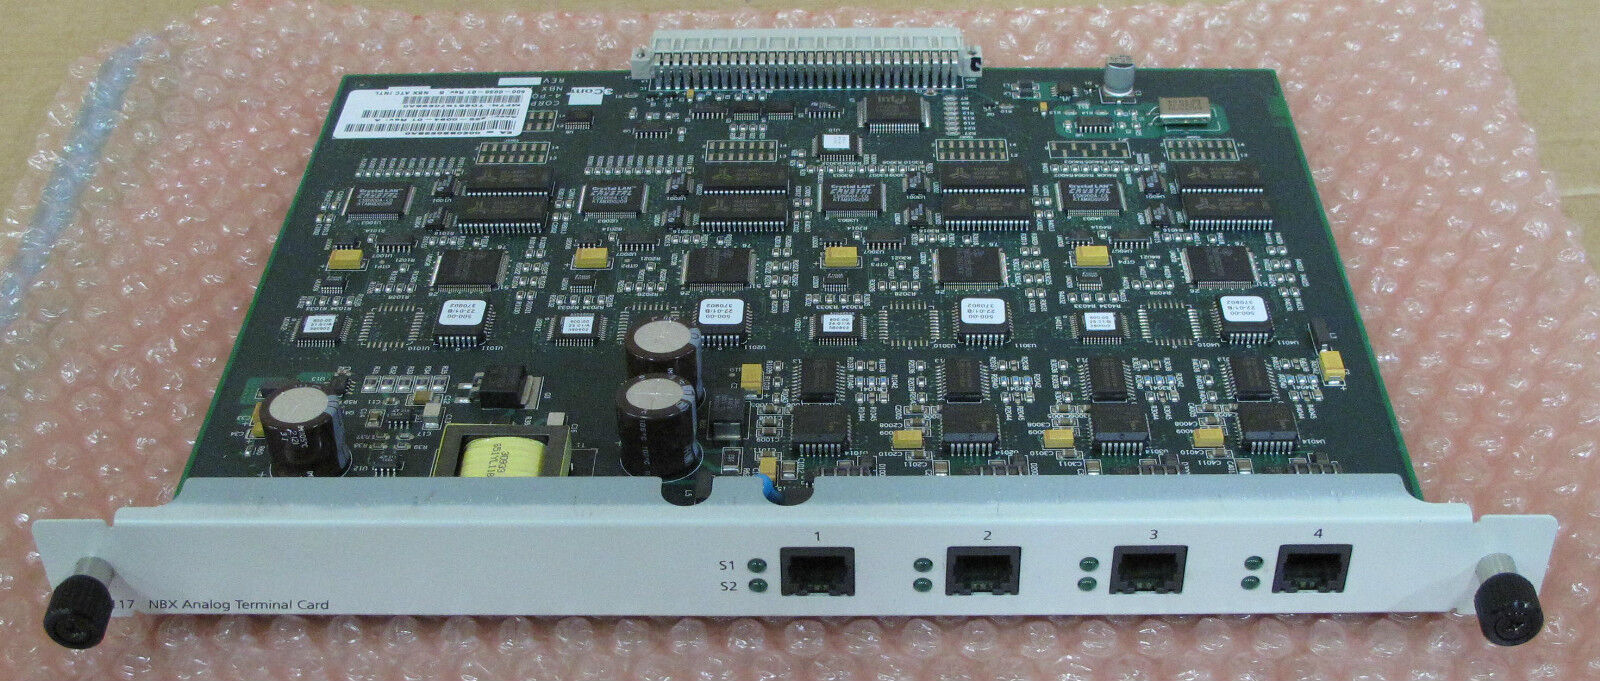 3Com 3C10117 NBX 4-Port RJ-11 Analog Terminal Card/Module, Service Module